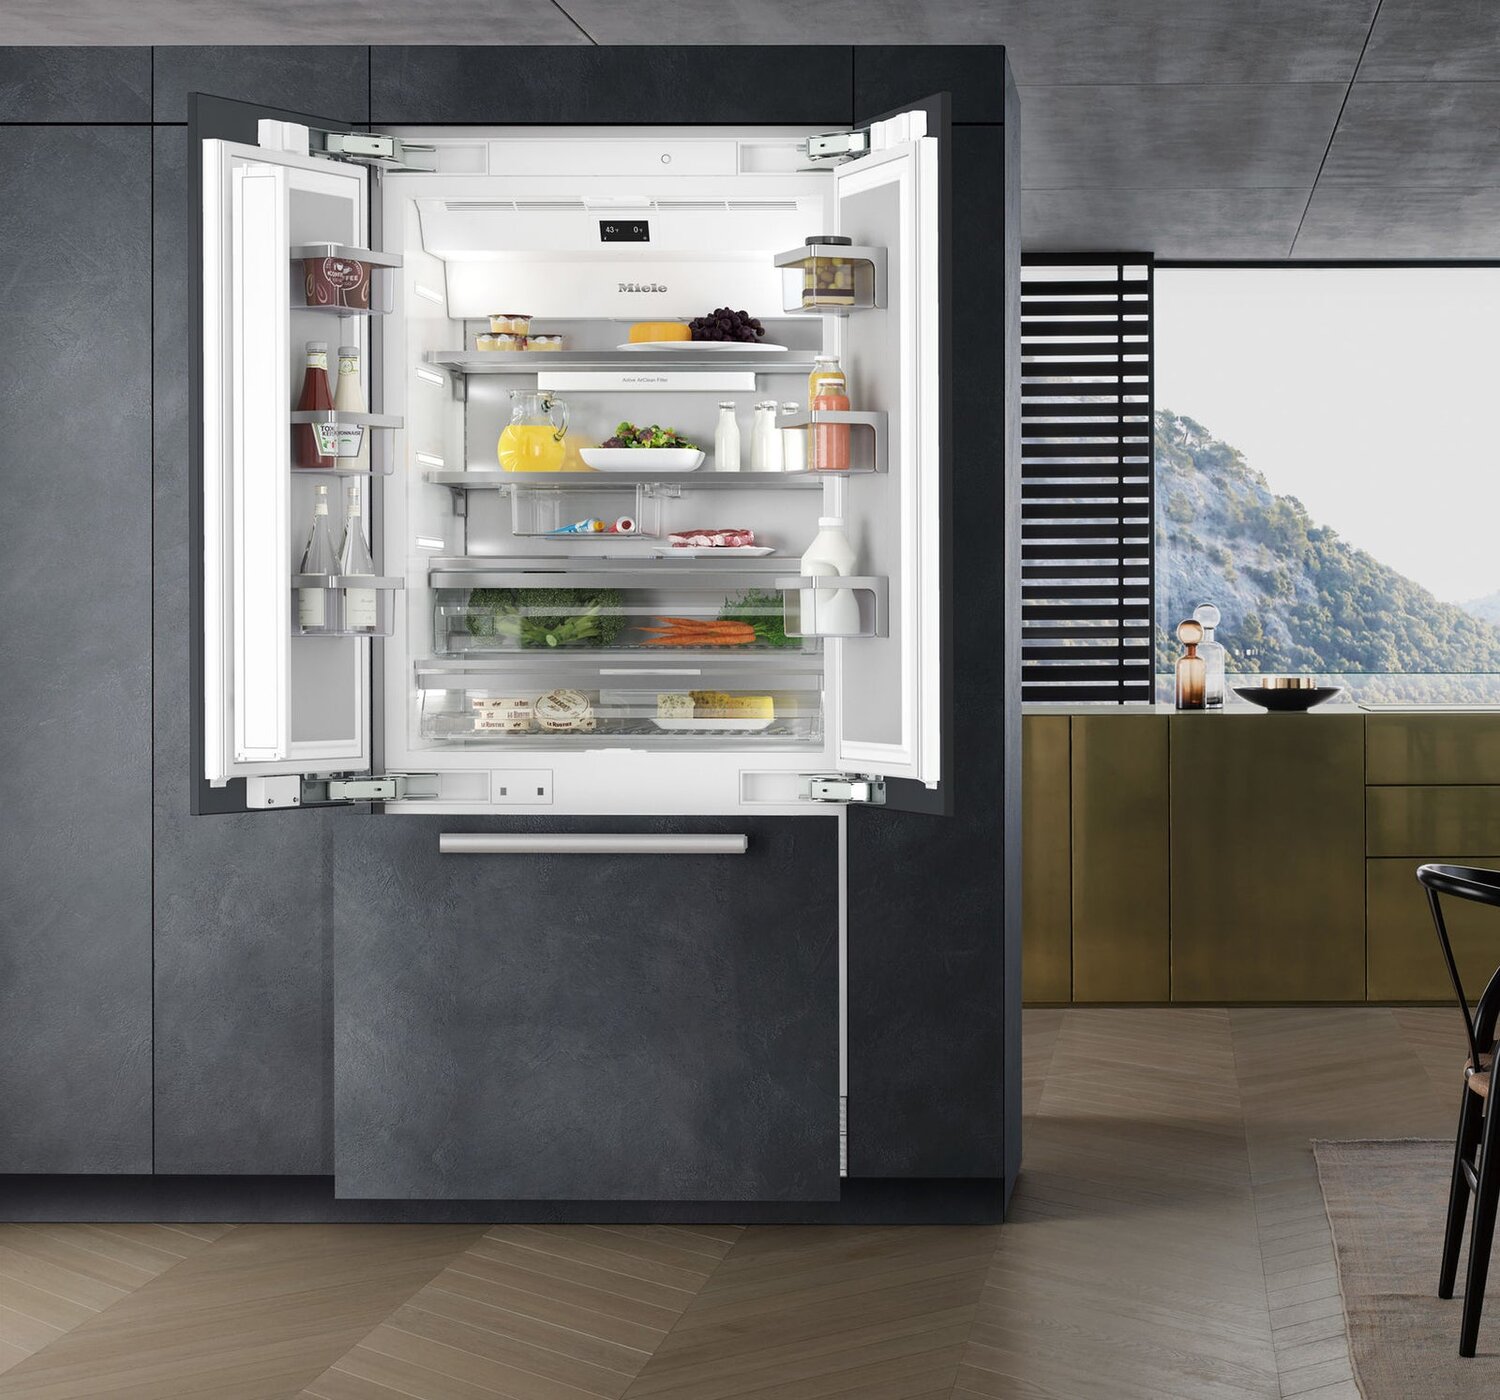 Are Miele Refrigerators Good? 